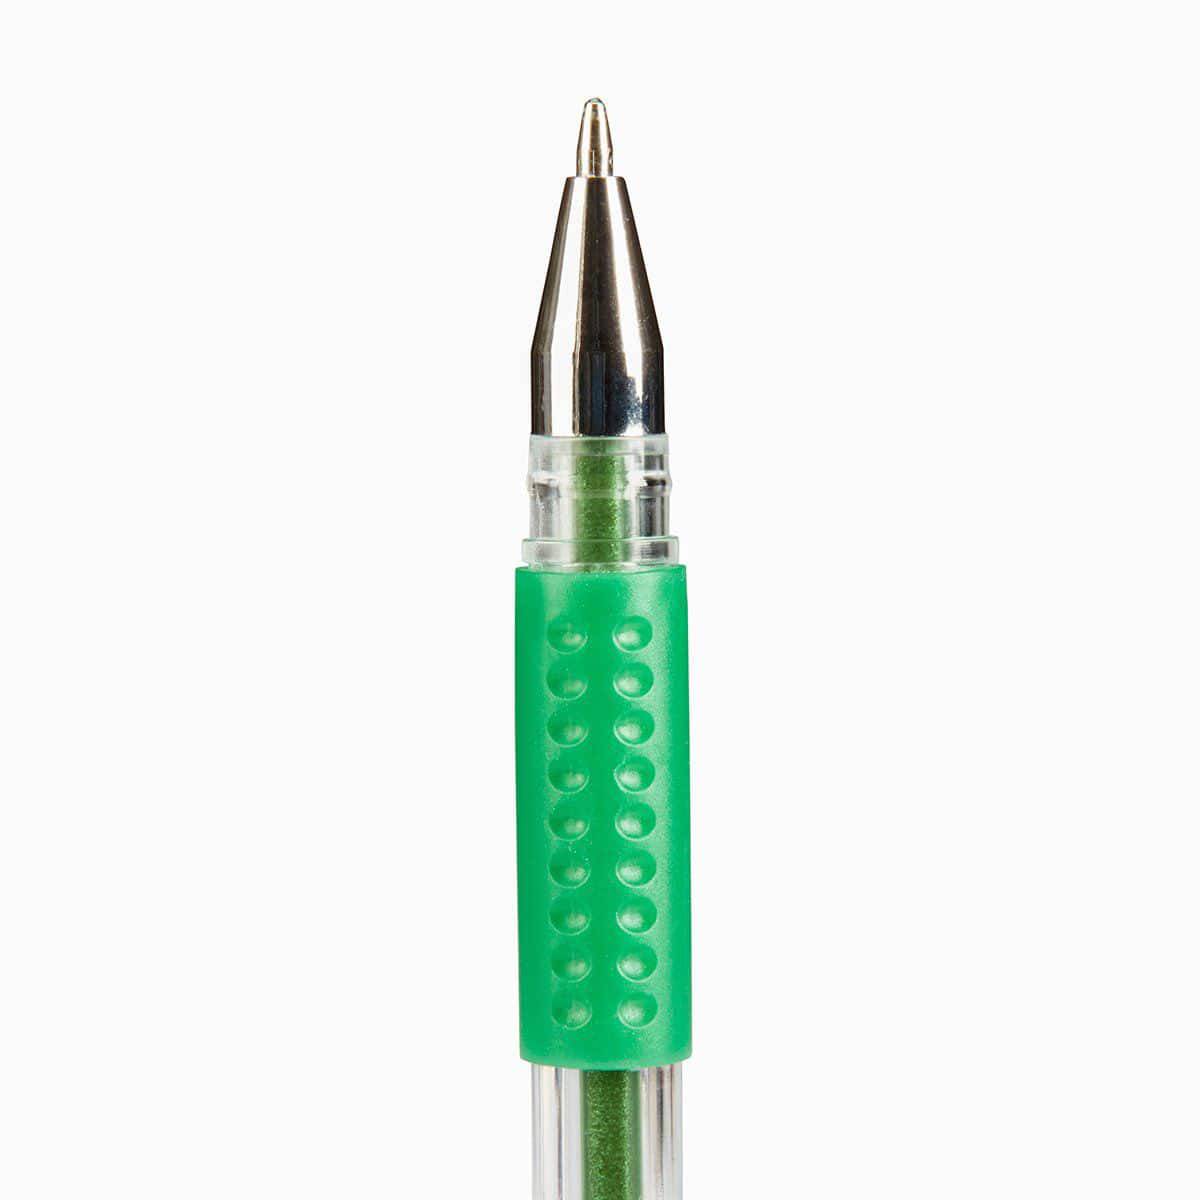 80 Pack Glitter Gel Pens, 40 Colors Glitter Gel Pens Set with 40